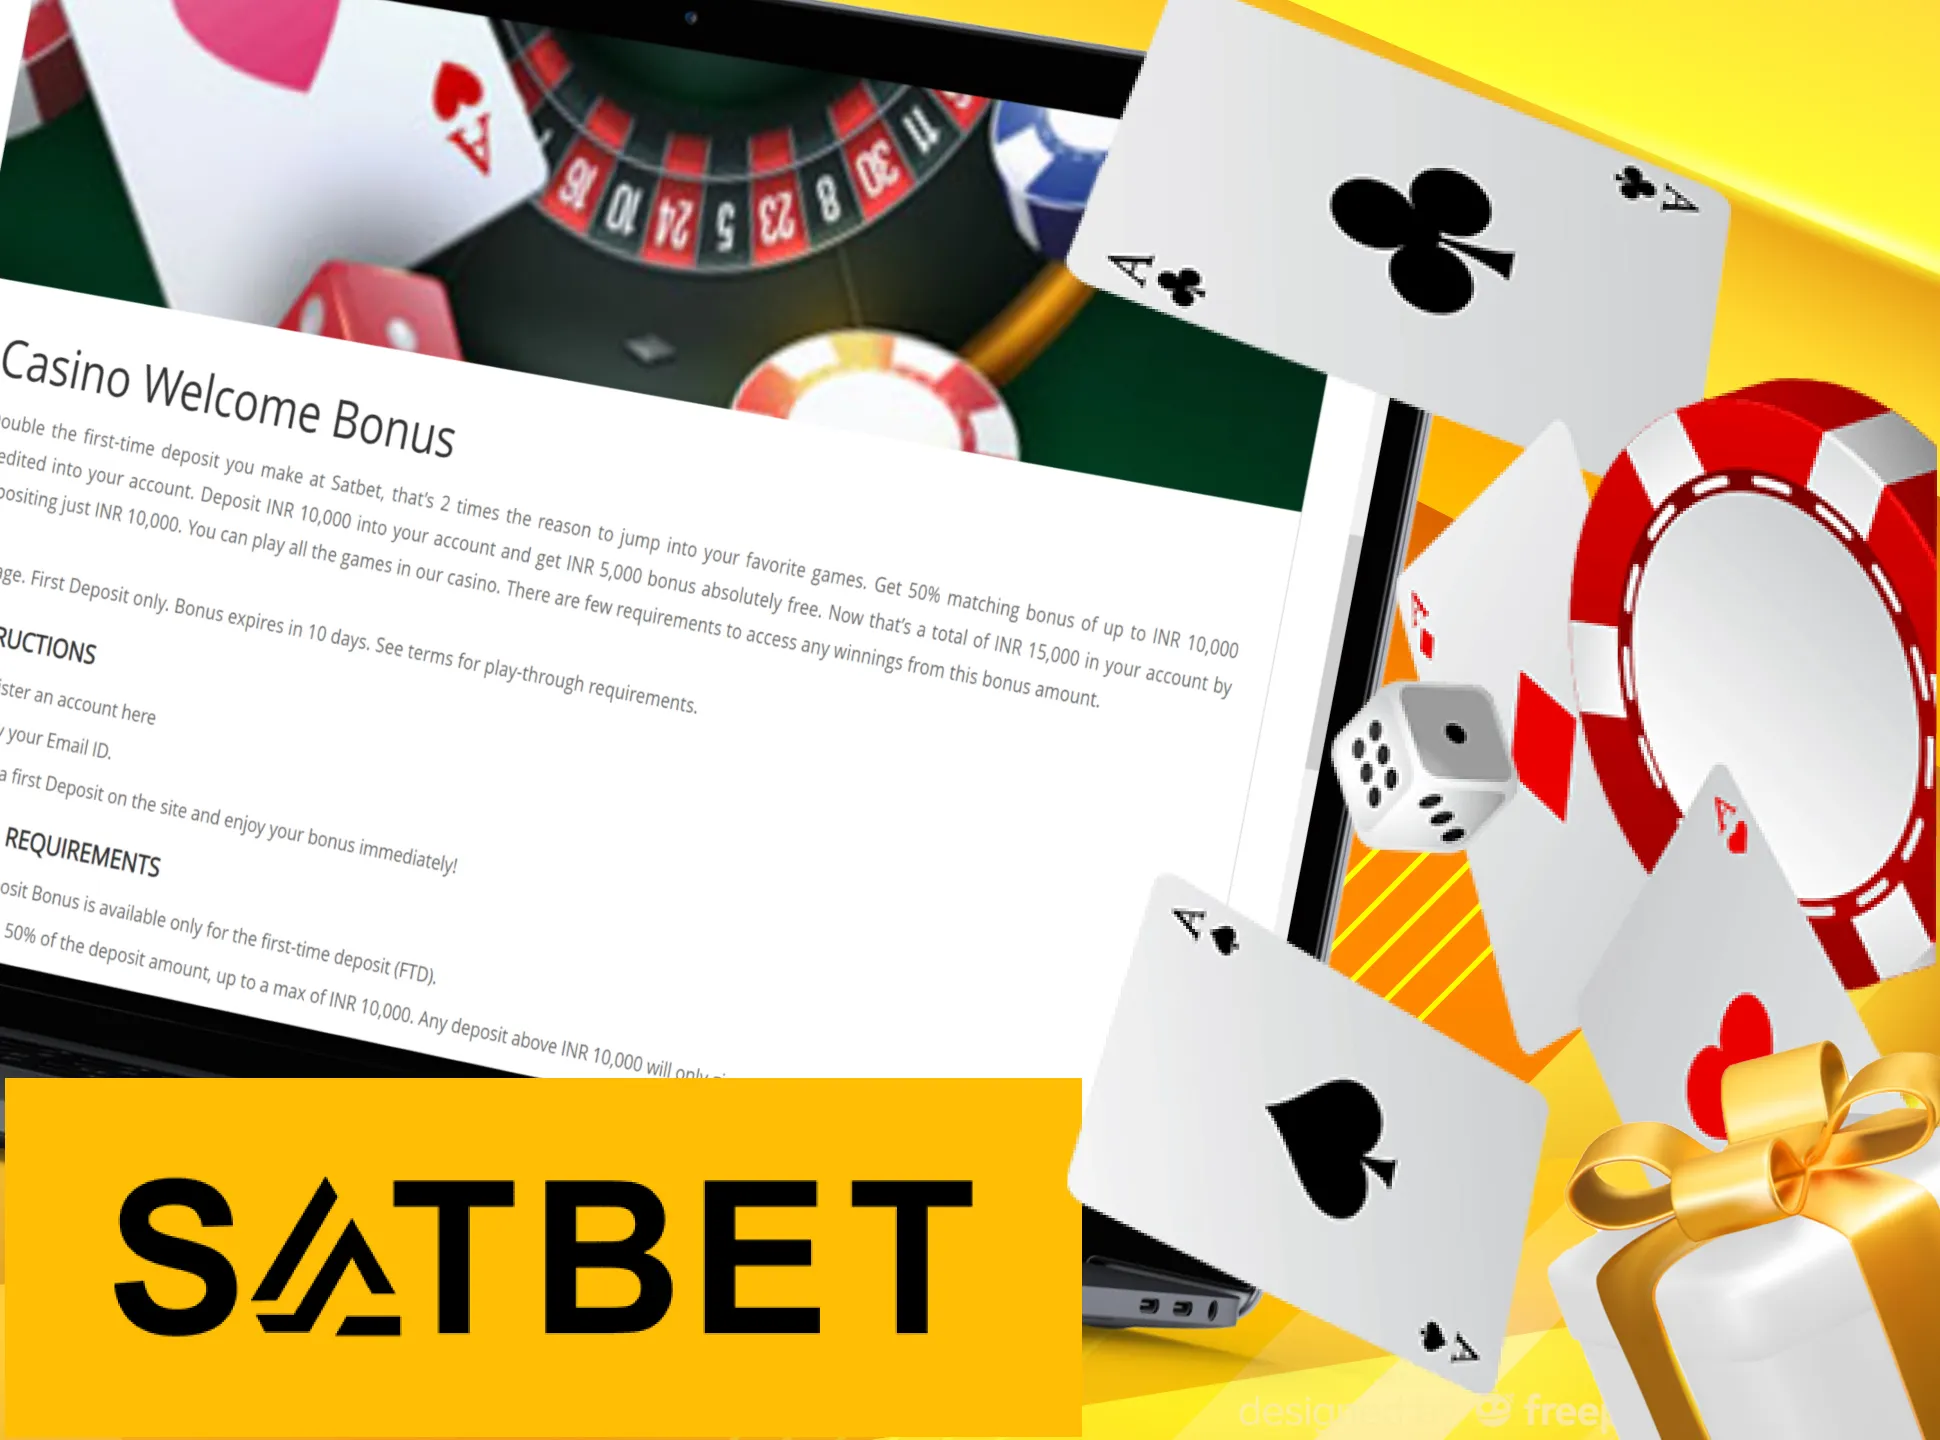 Play Satbet casino games and get your bonus.